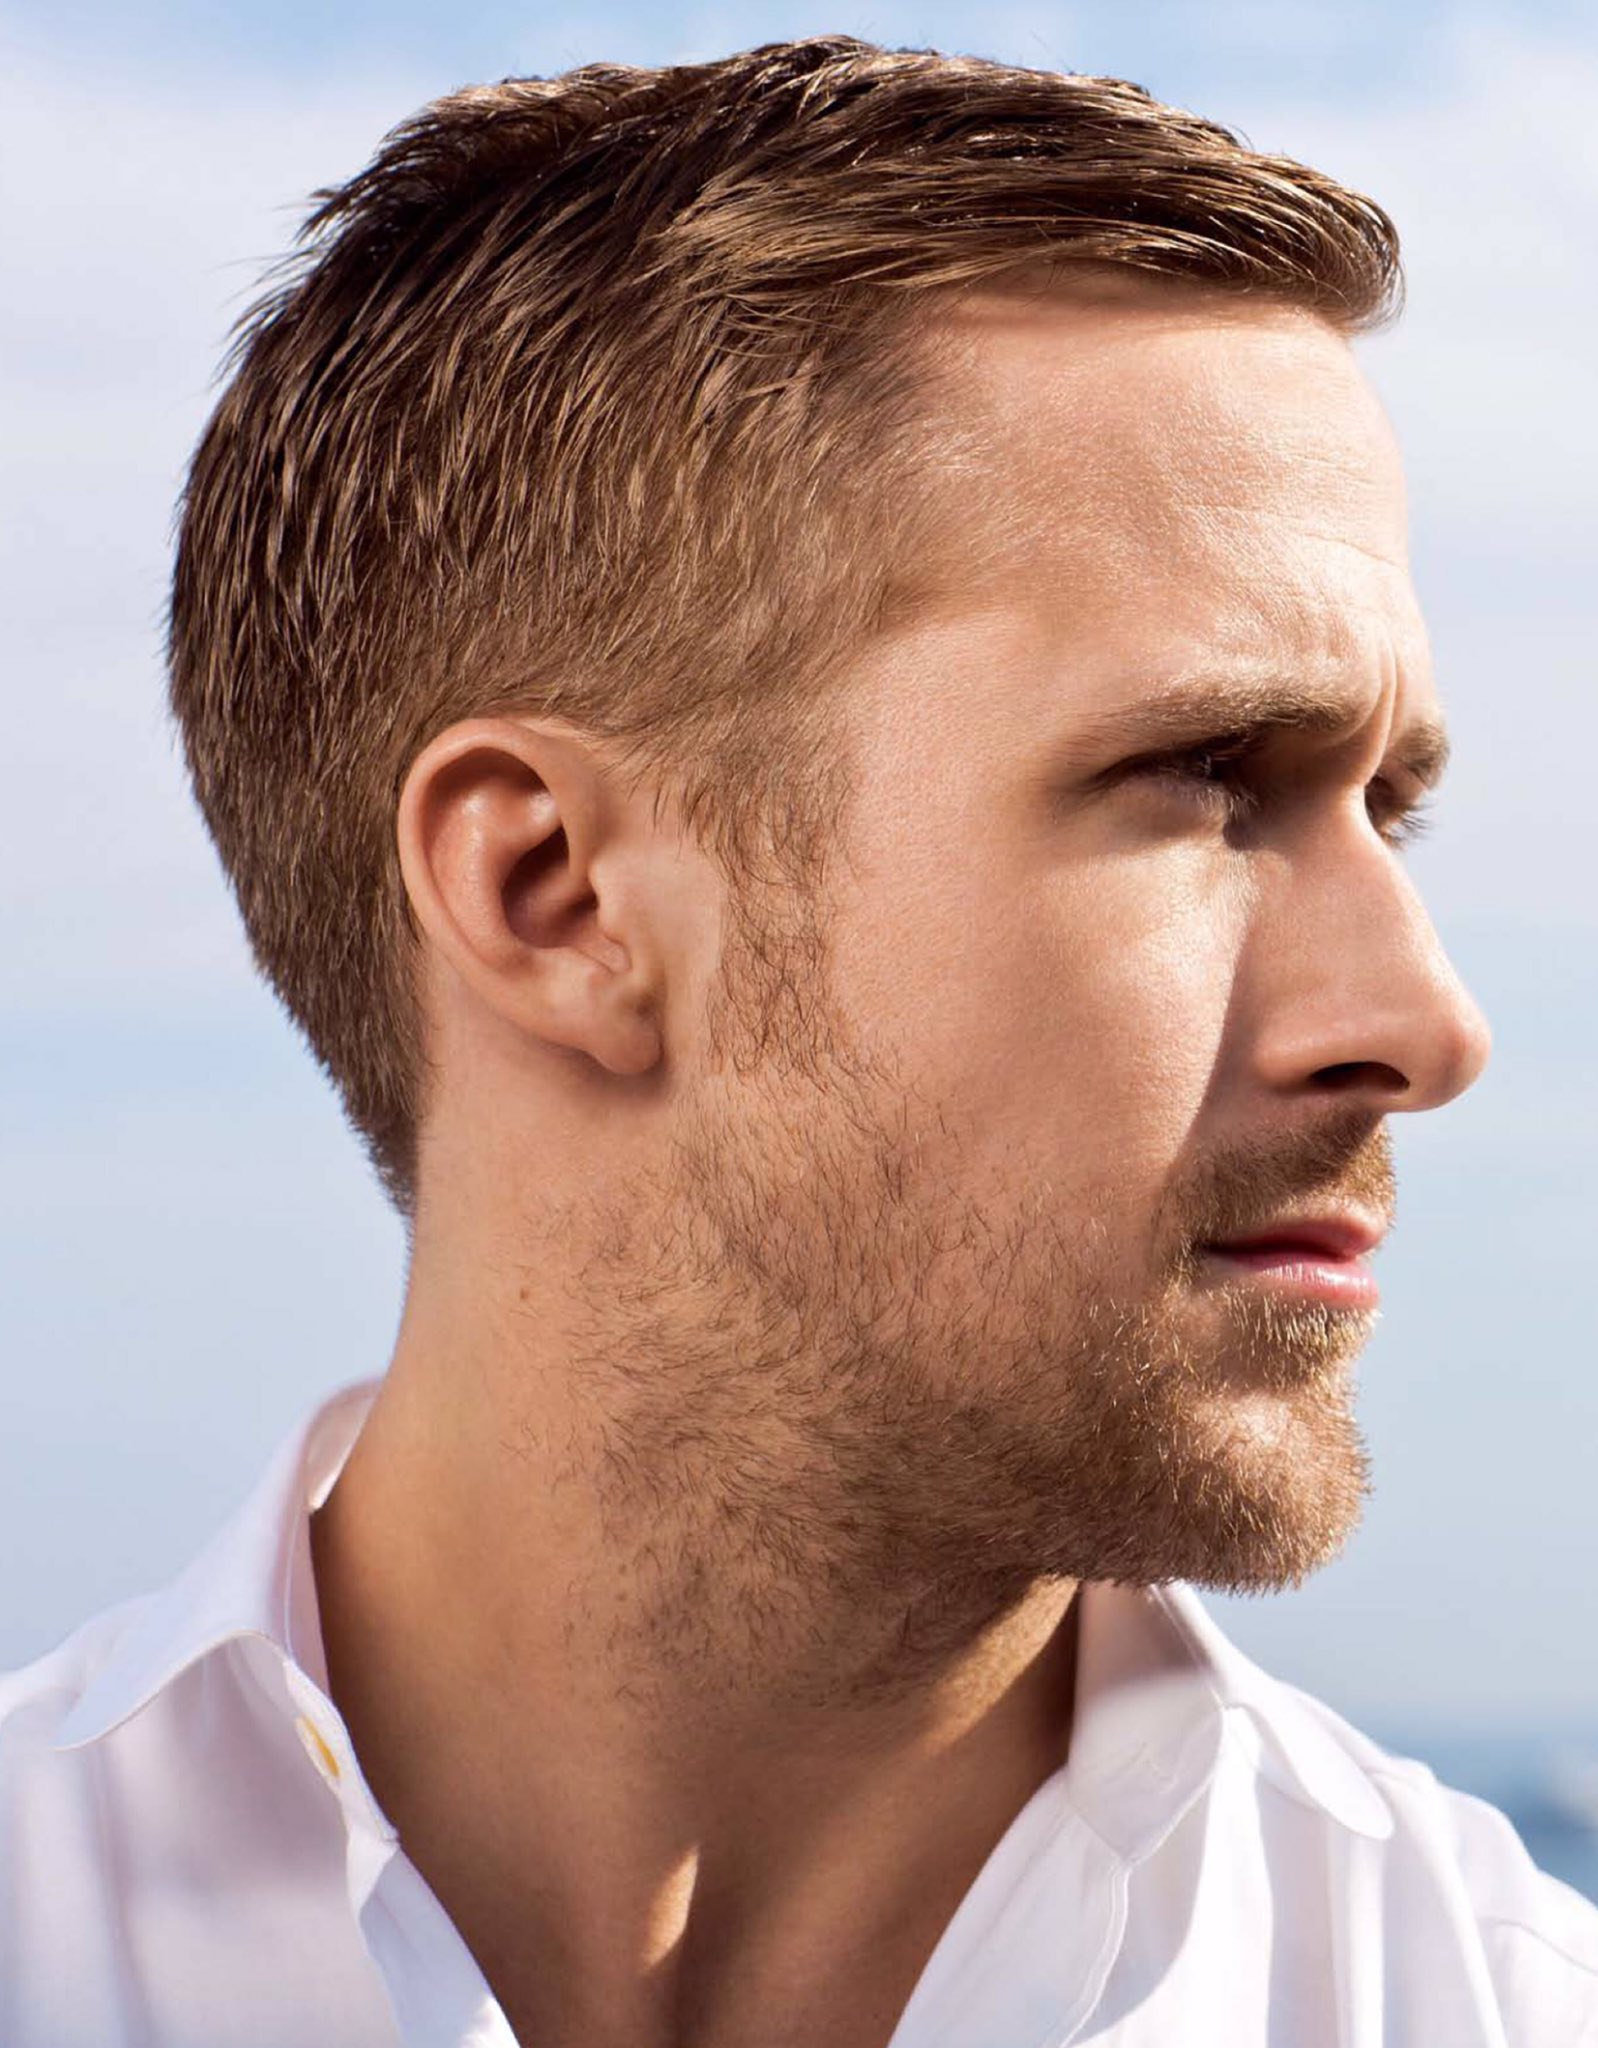 Ryan Gosling without beard or facial hair - Famous Men's Beards and Facial Hair  Styles - Barbershop Forums